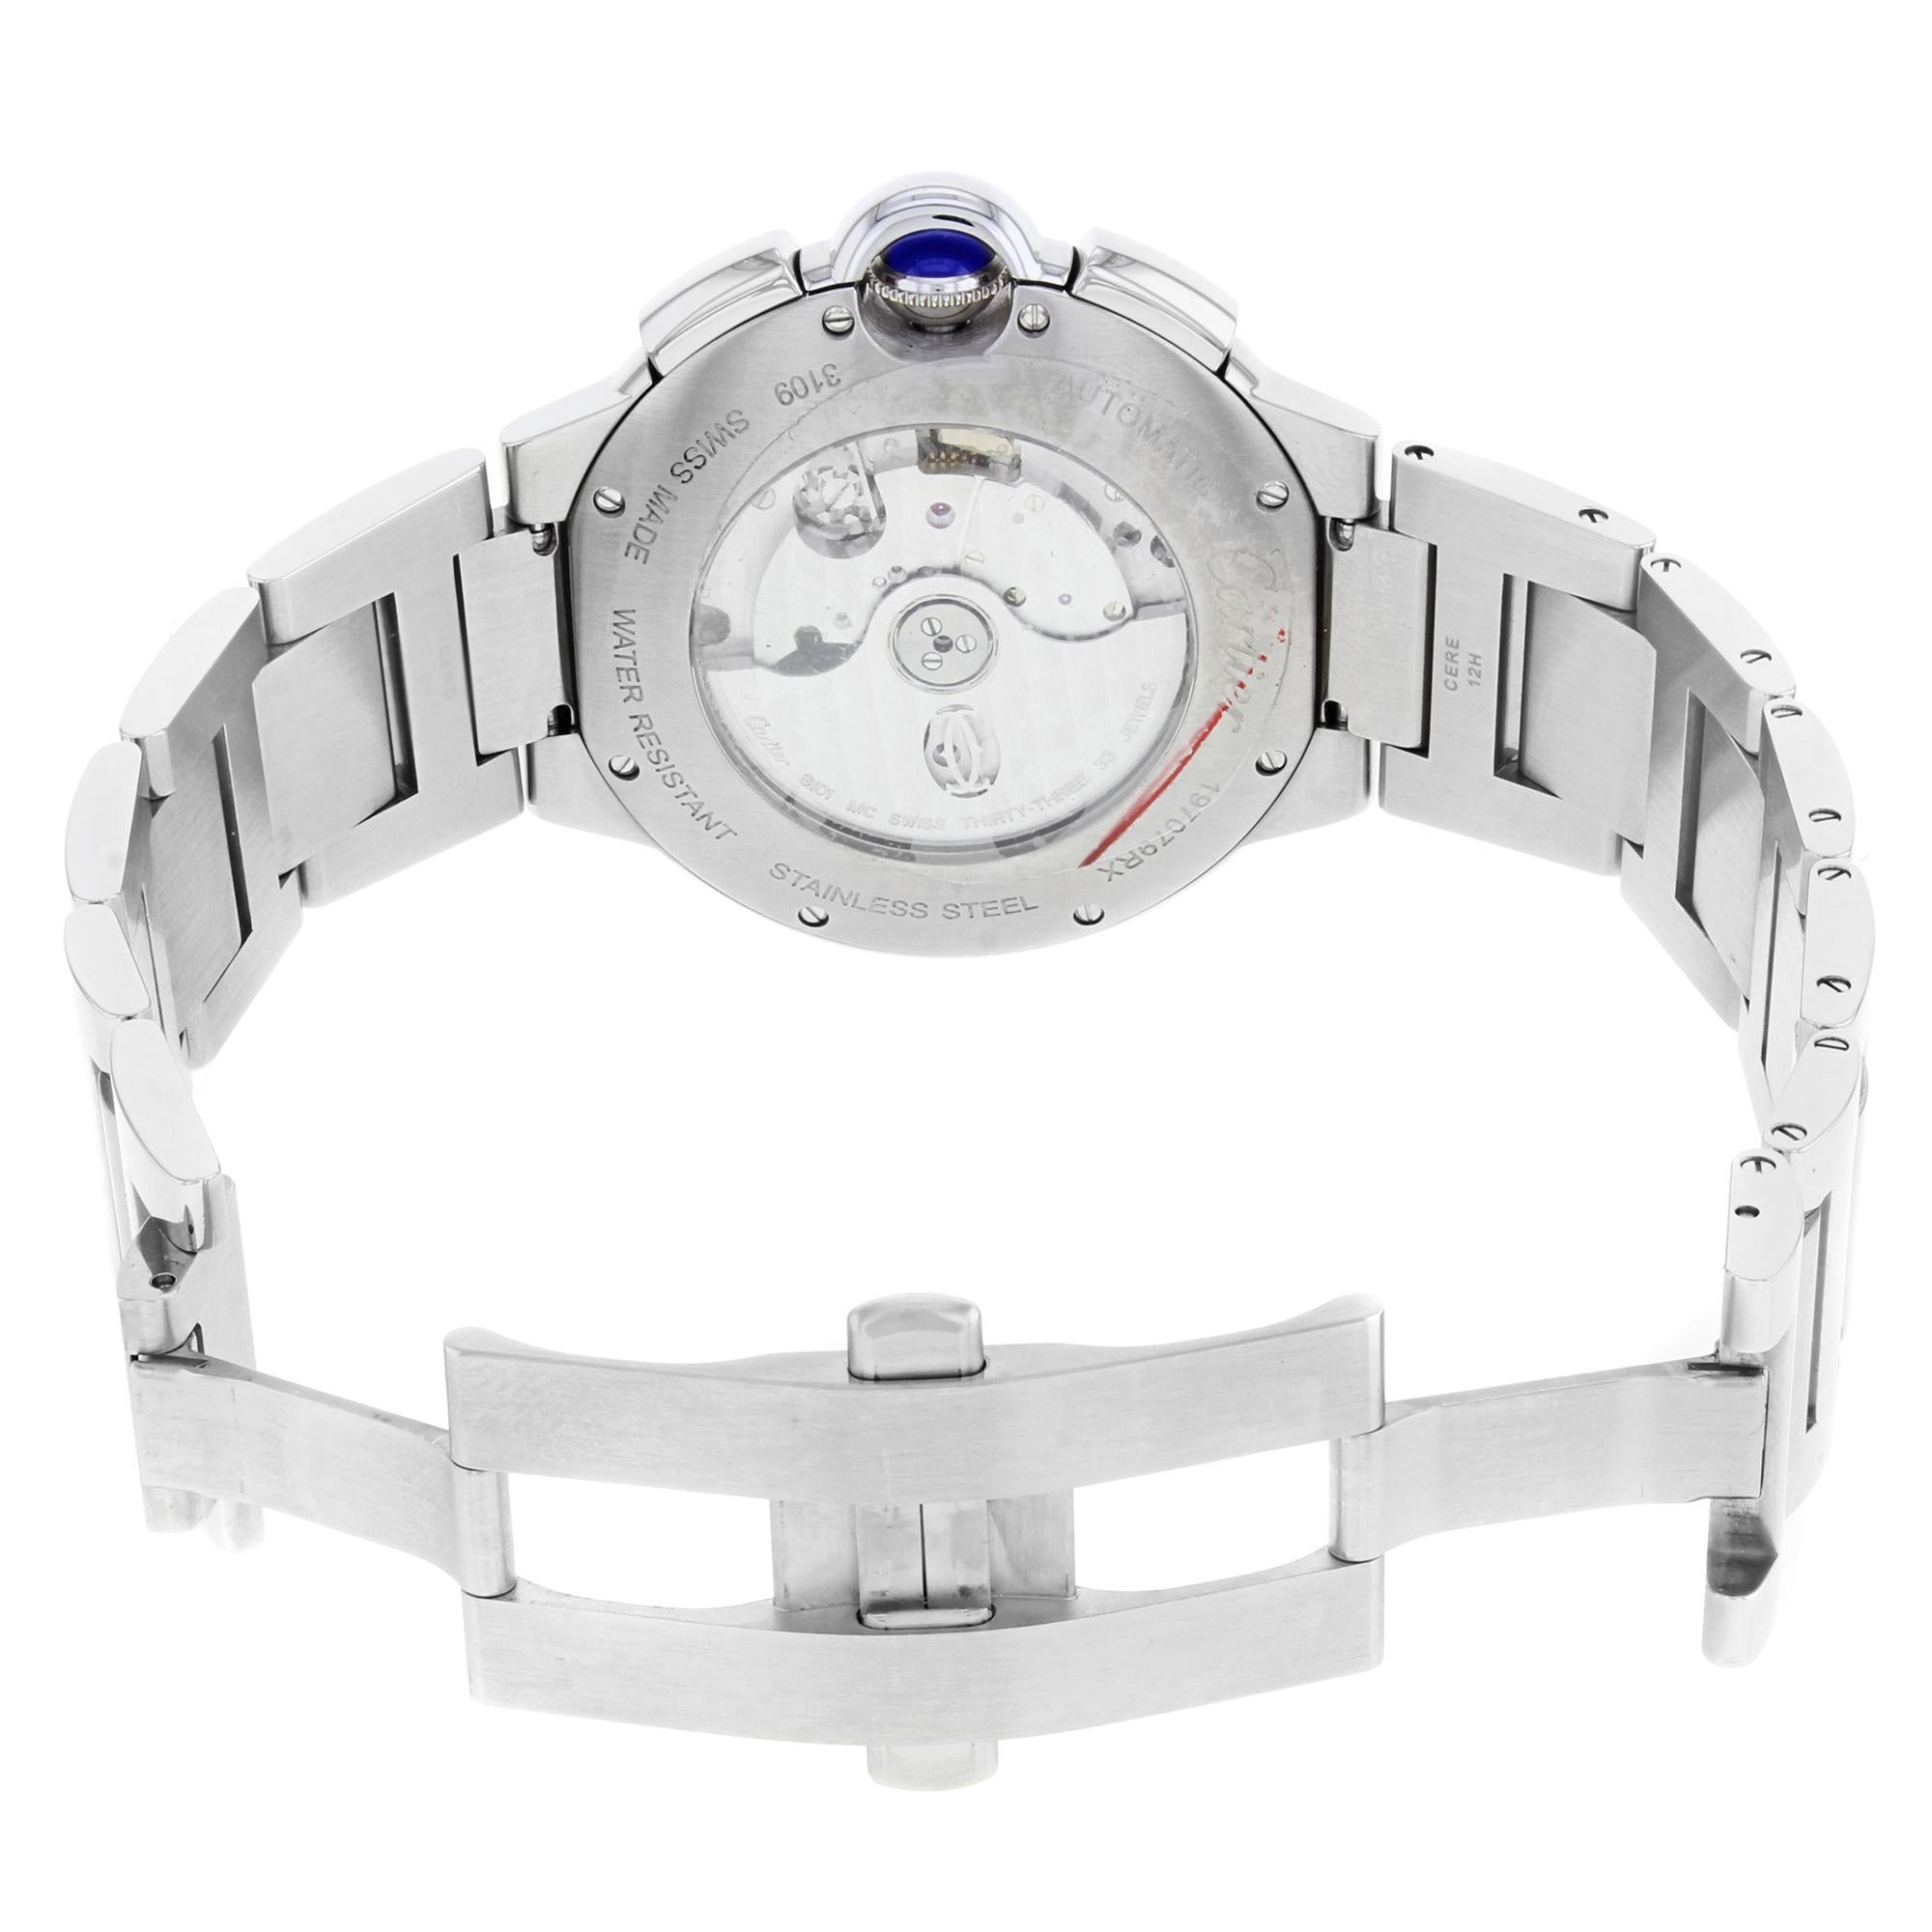 Cartier Ballon Bleu Chronograph Steel Grey Dial Automatic Men's Watch W6920025 2